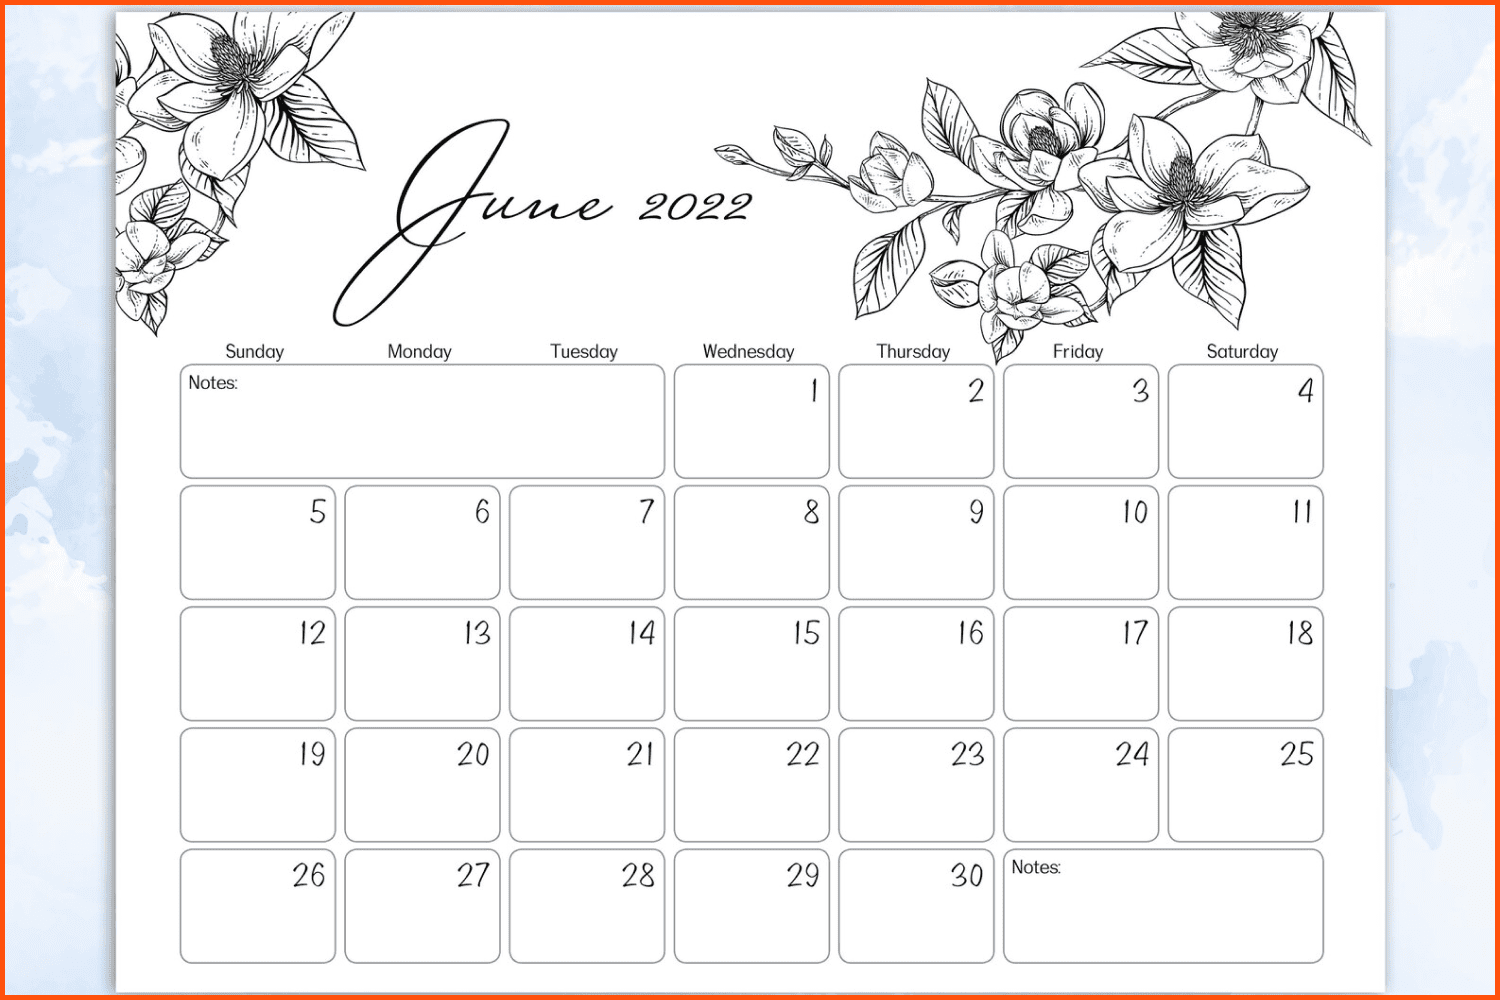 Black & White Magnolia flower drawings Calendar.